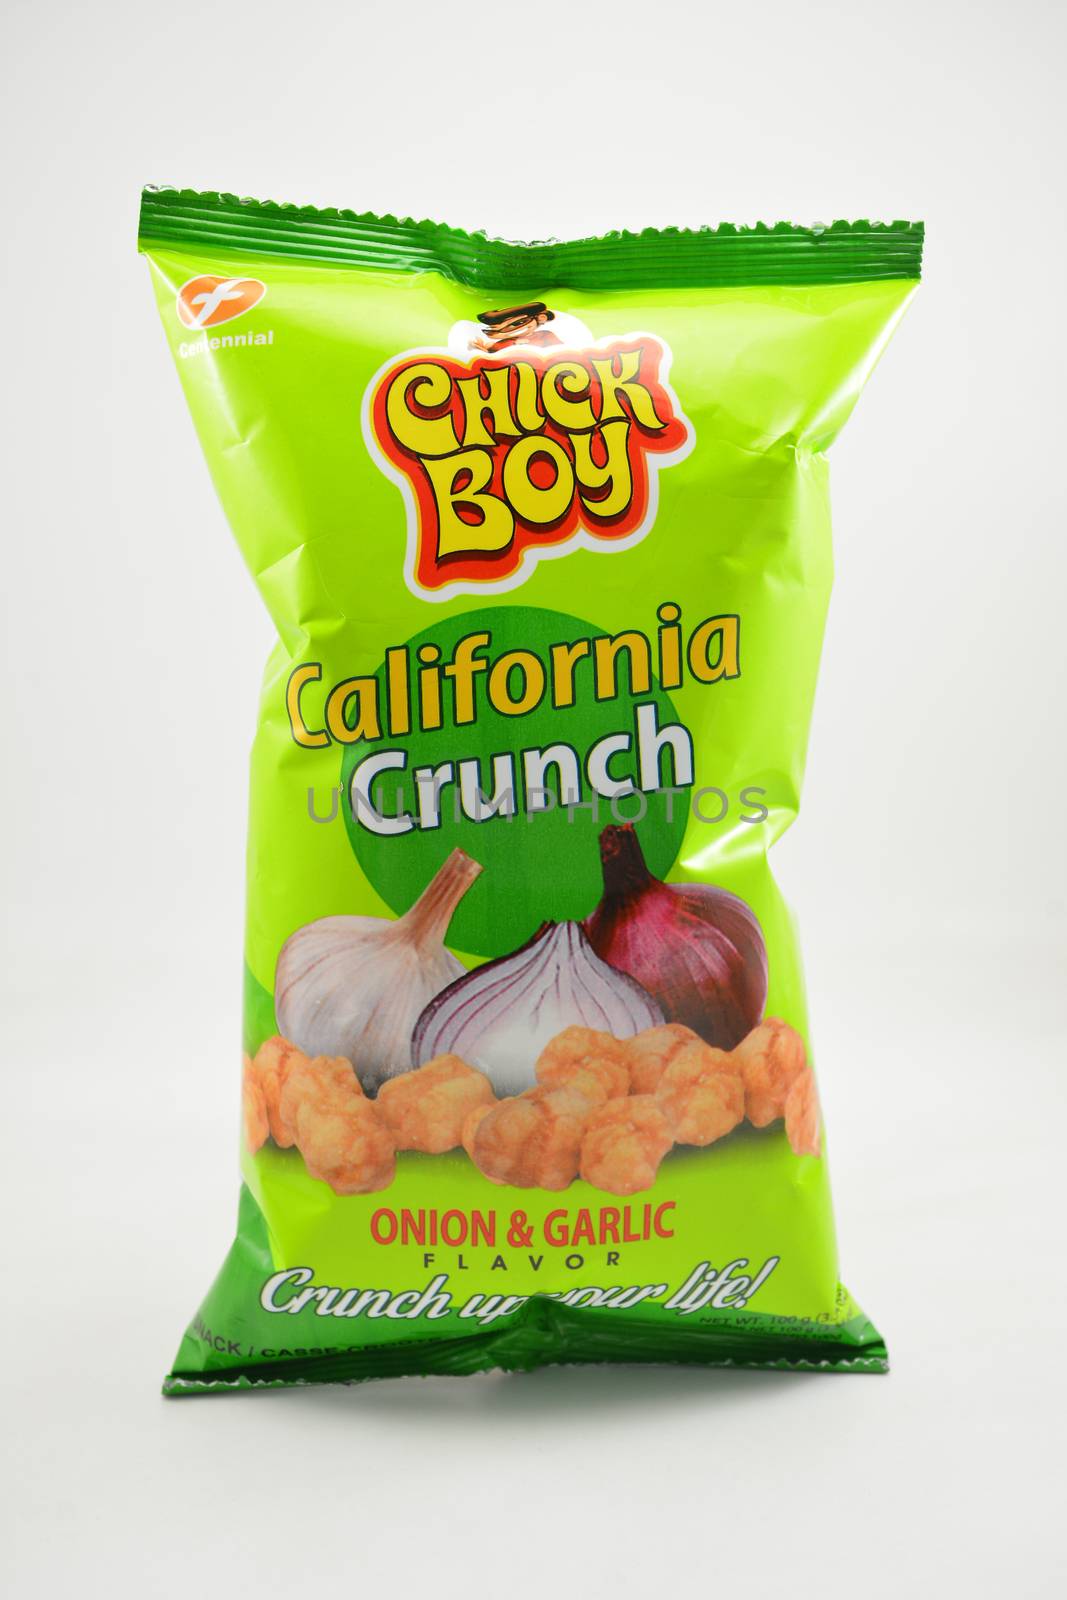 Chick boy California crunch corn bits in Manila, Philippines by imwaltersy